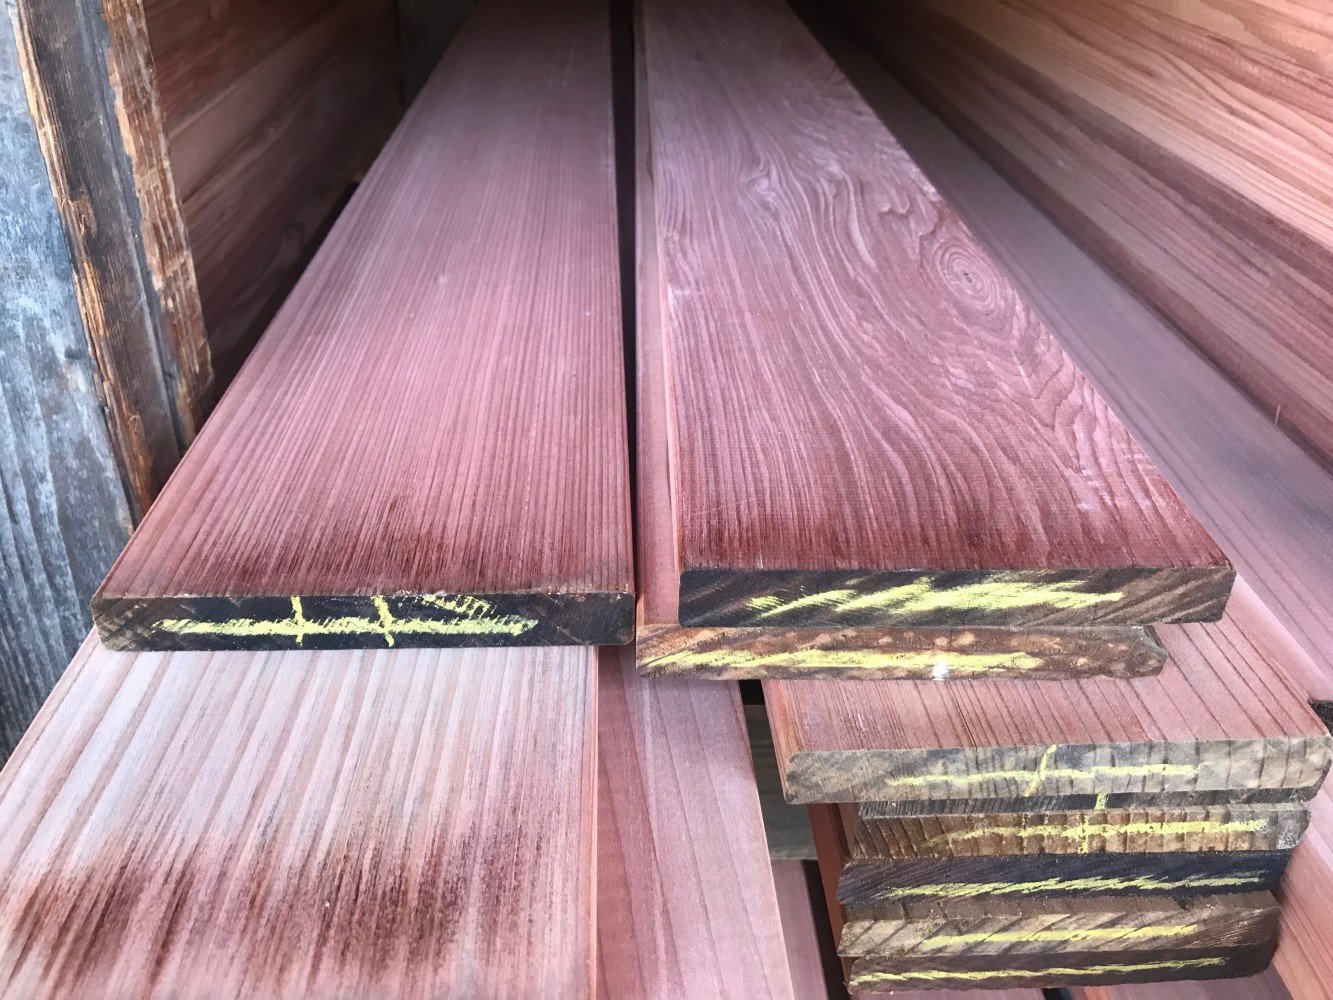 Dense vertical grain dry redwood lumber